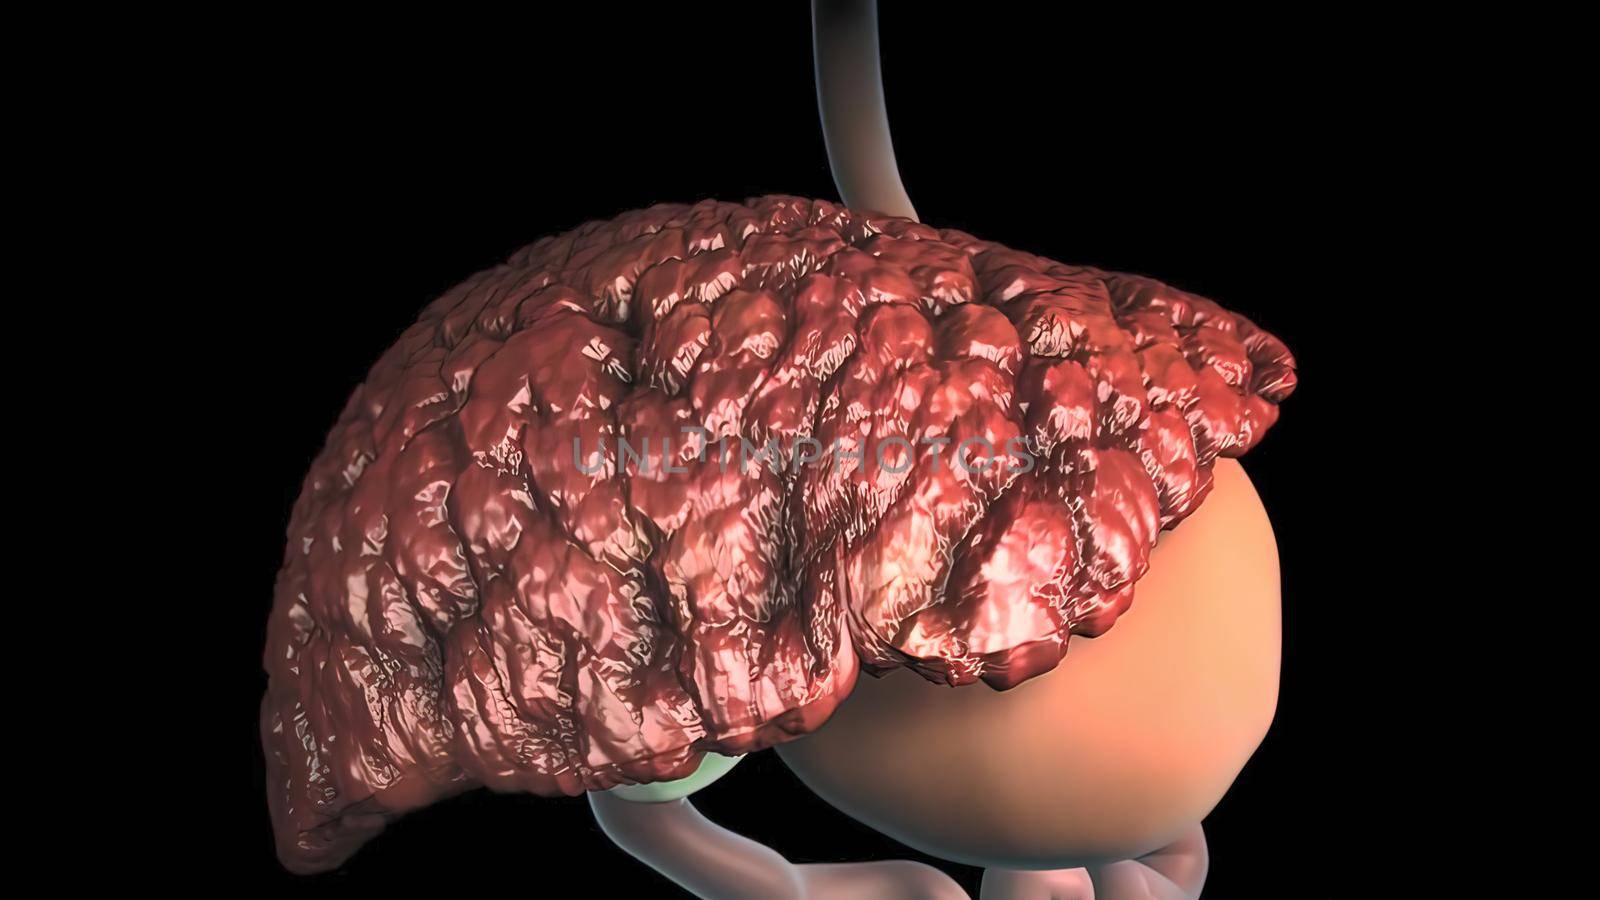 Human liver anatomy. Liver cancer symptoms by creativepic